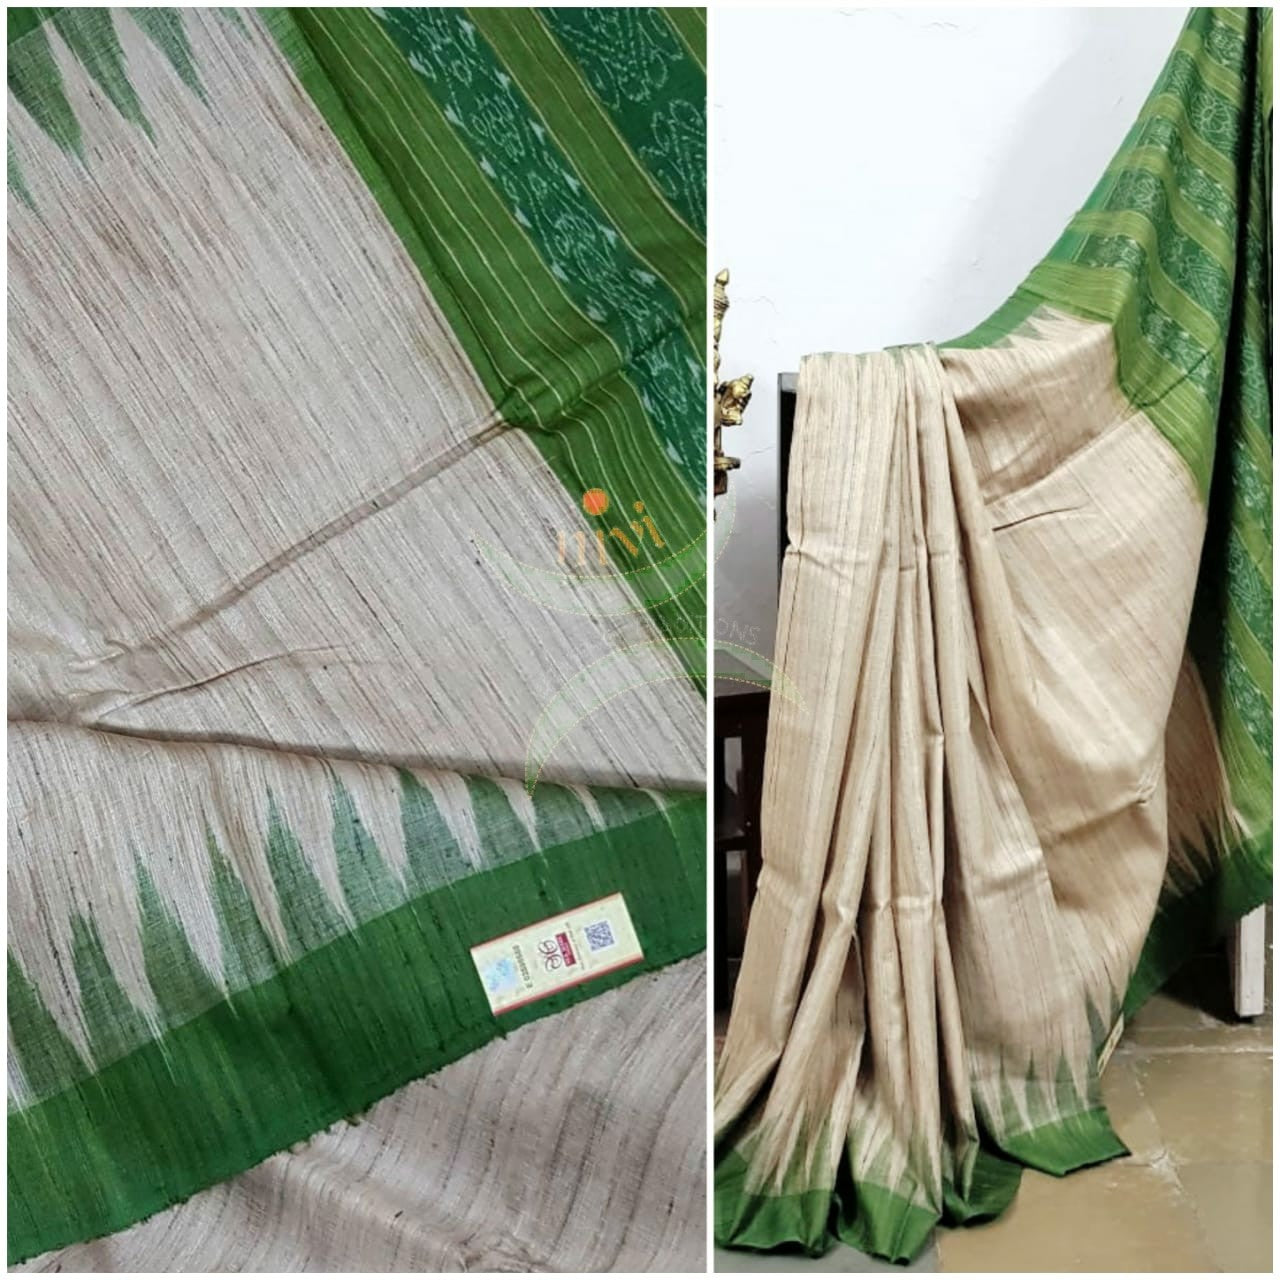 Handloom sambalpuri geecha tussar with contrasting green temple border and pallu.